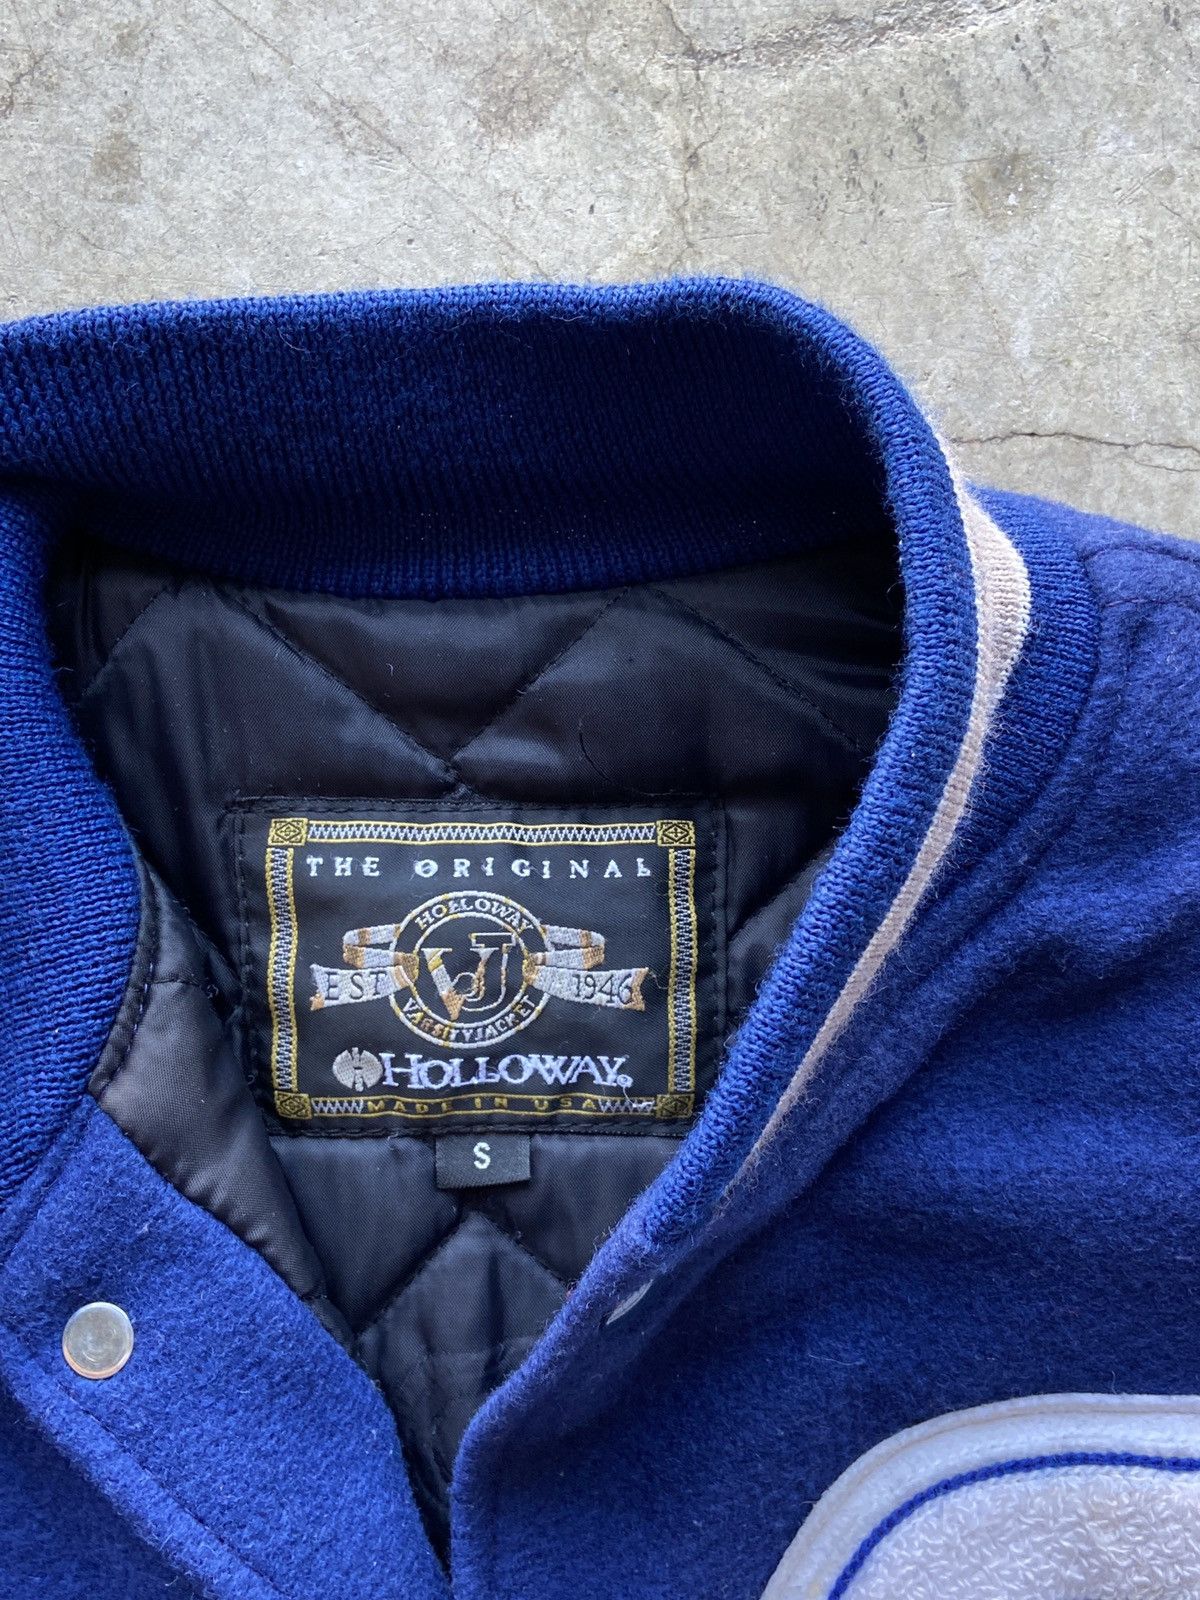 Vintage Vintage Blue Varsity Jacket Leather Sleeves Size Small Size US S / EU 44-46 / 1 - 4 Thumbnail